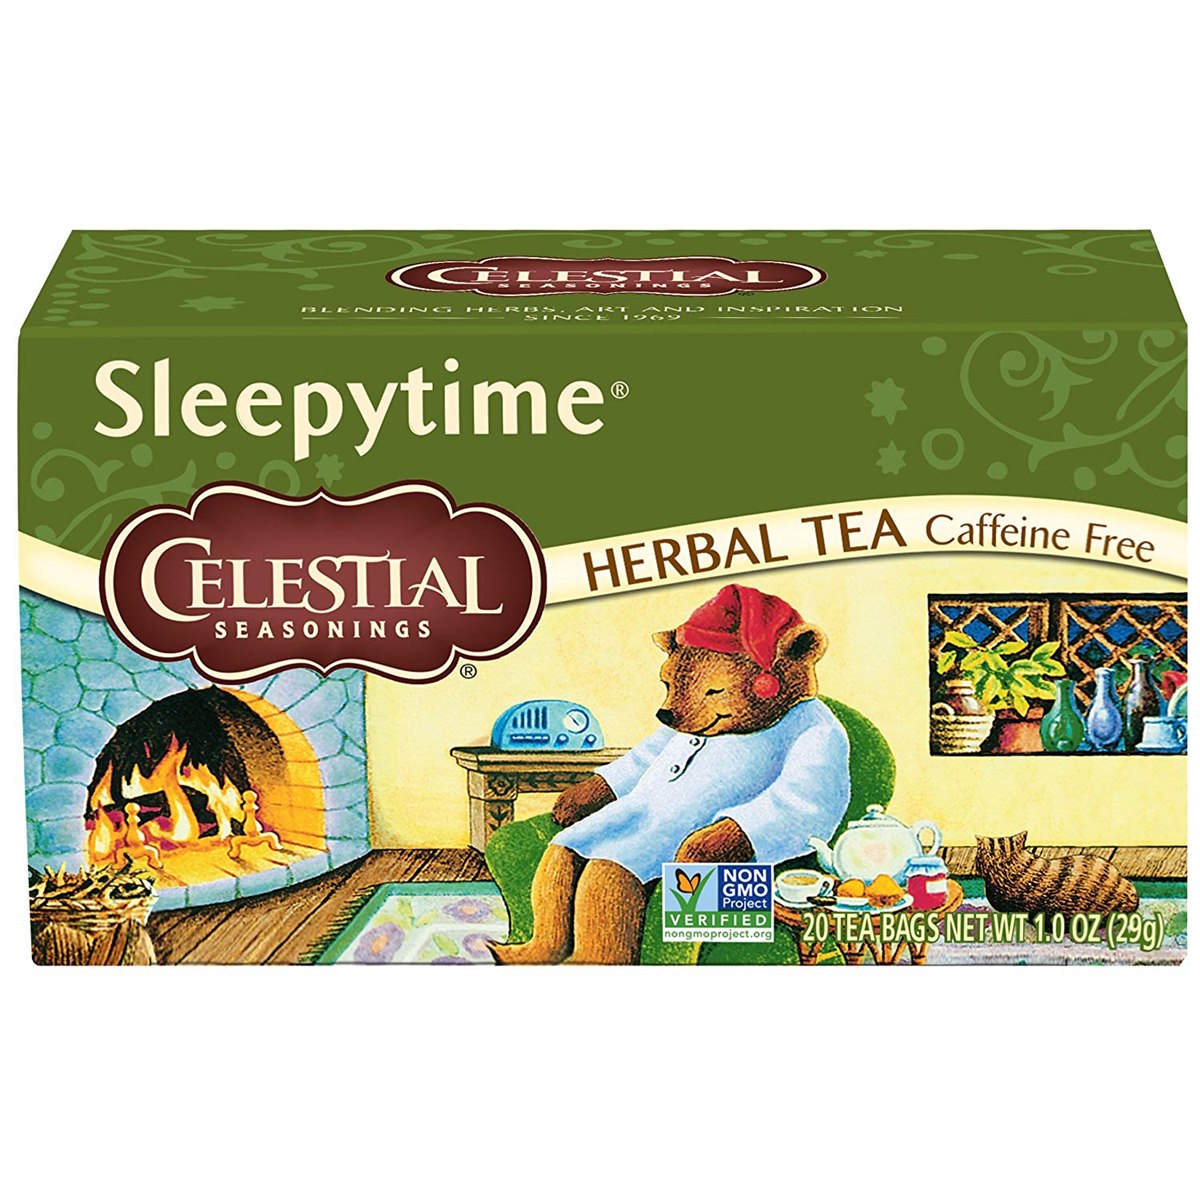 Celestial Seasonings Classic Sleepytime Infusion Tea Pack of 20